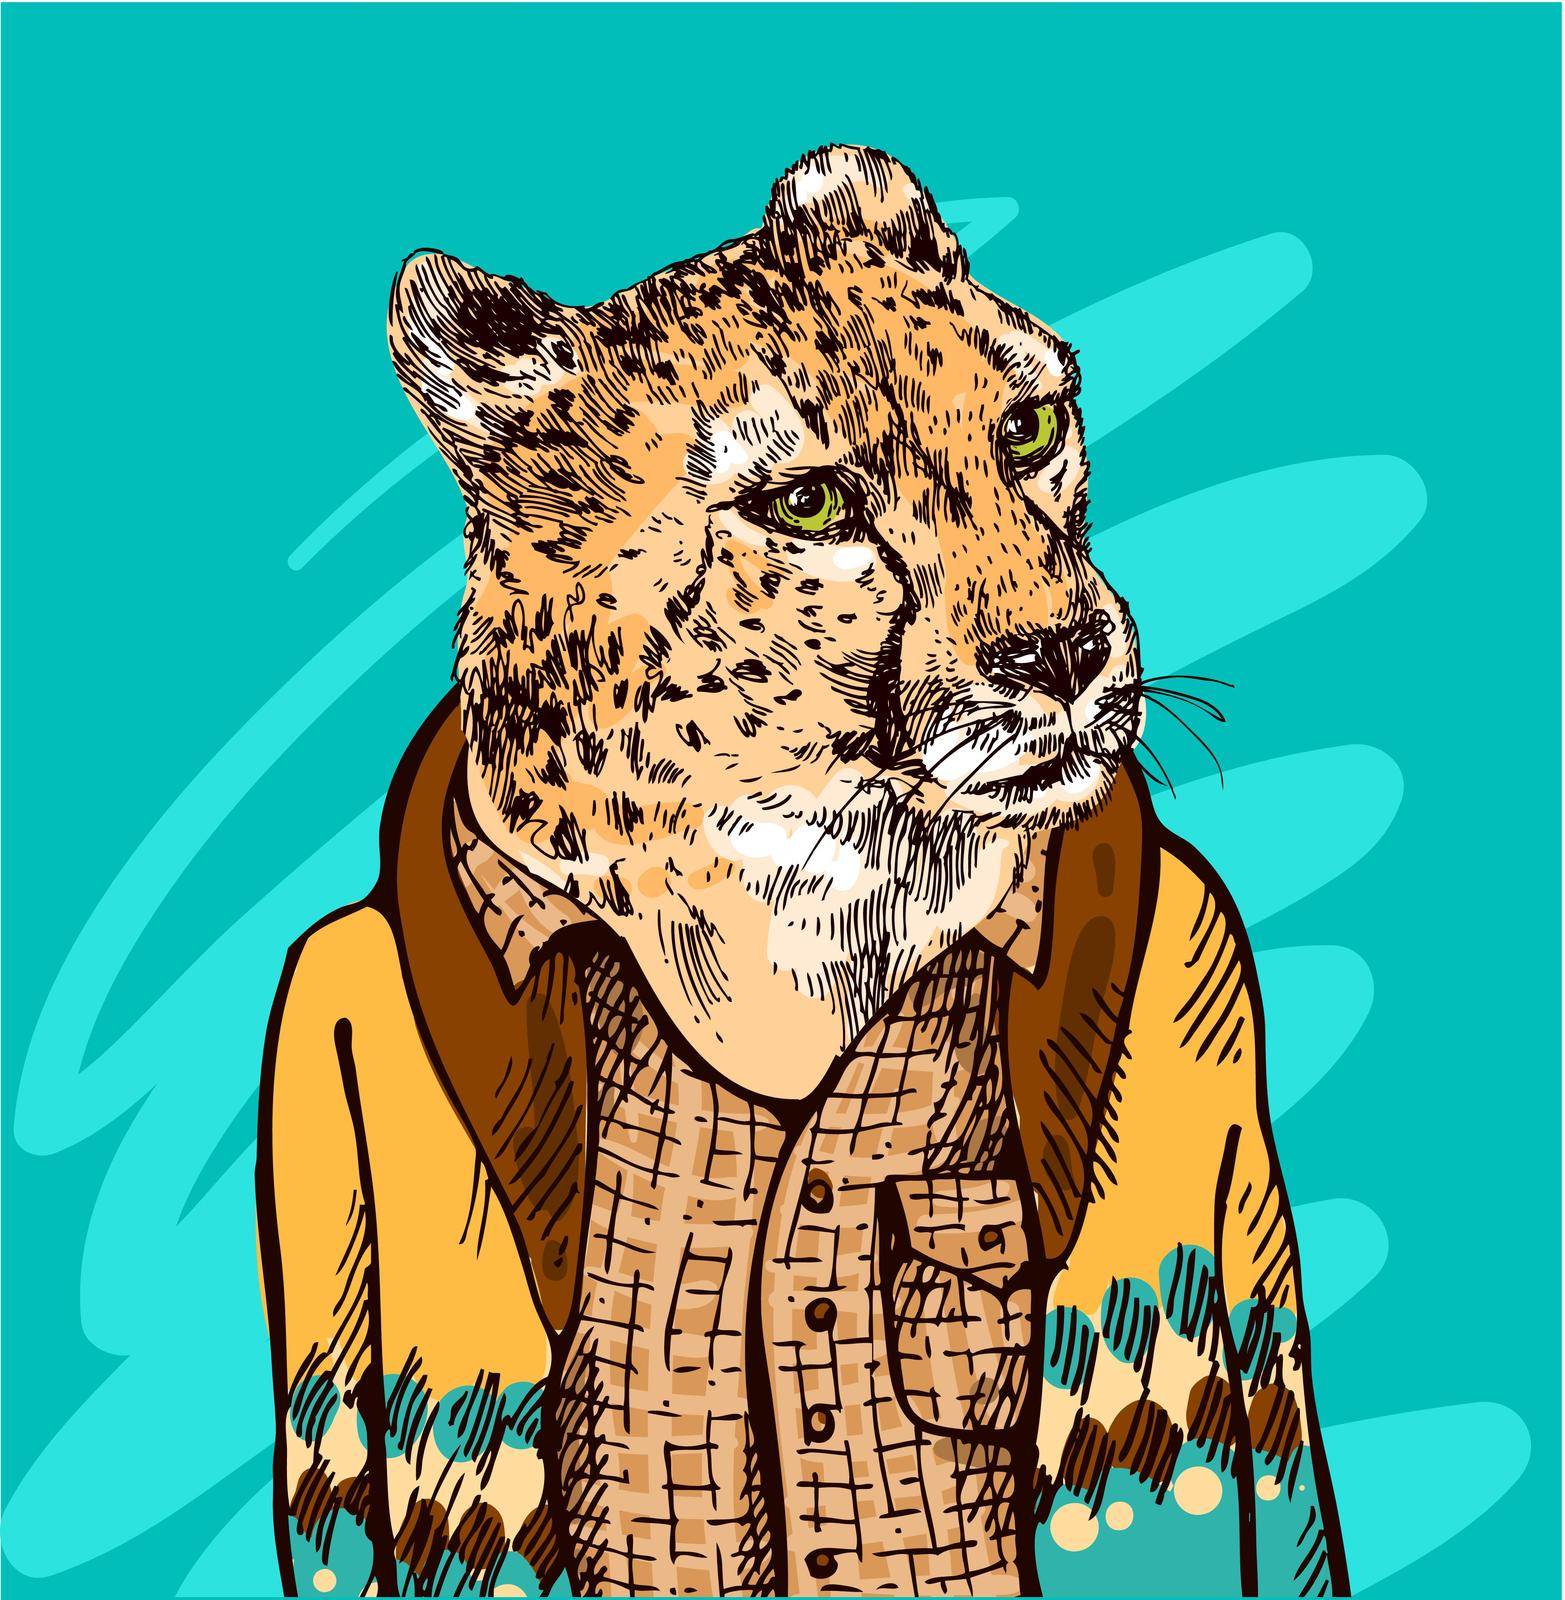 Leopard in a jacket by steshnikova